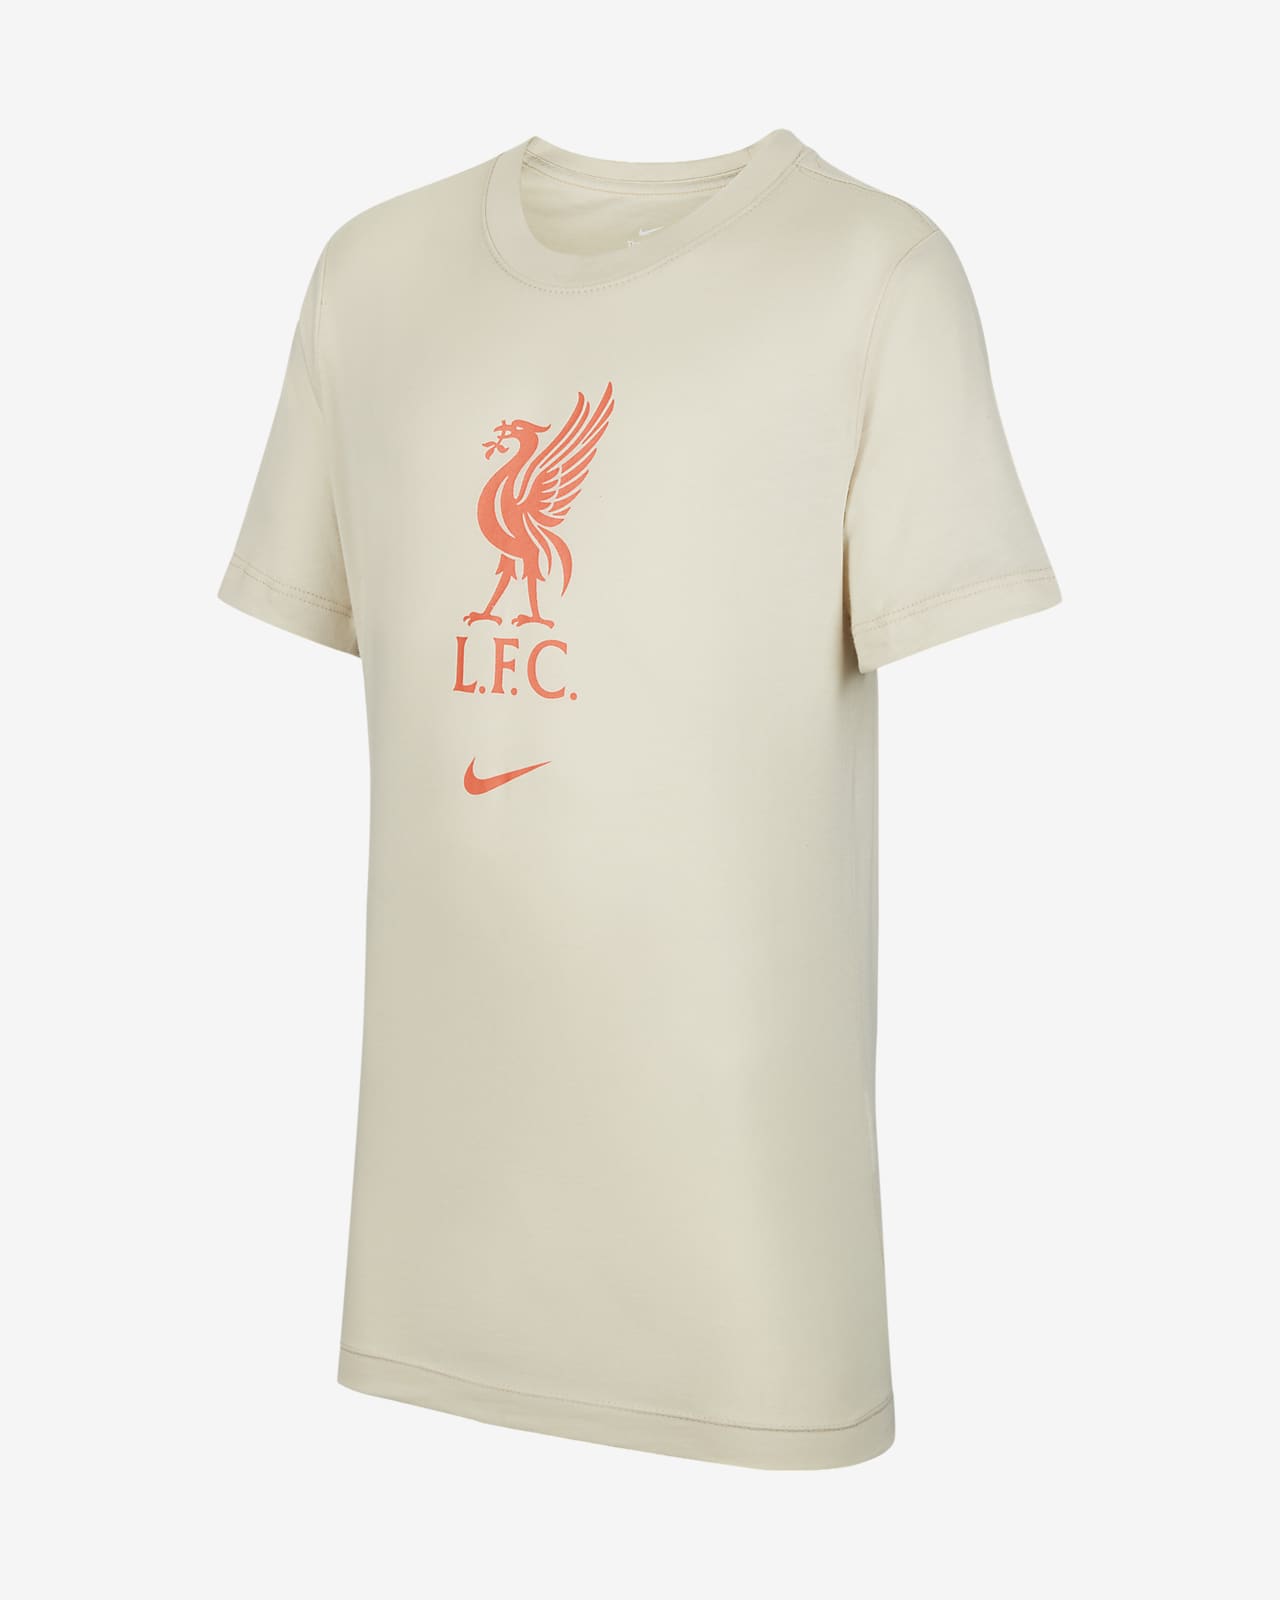 Liverpool F.C. Older Kids' Football T-Shirt